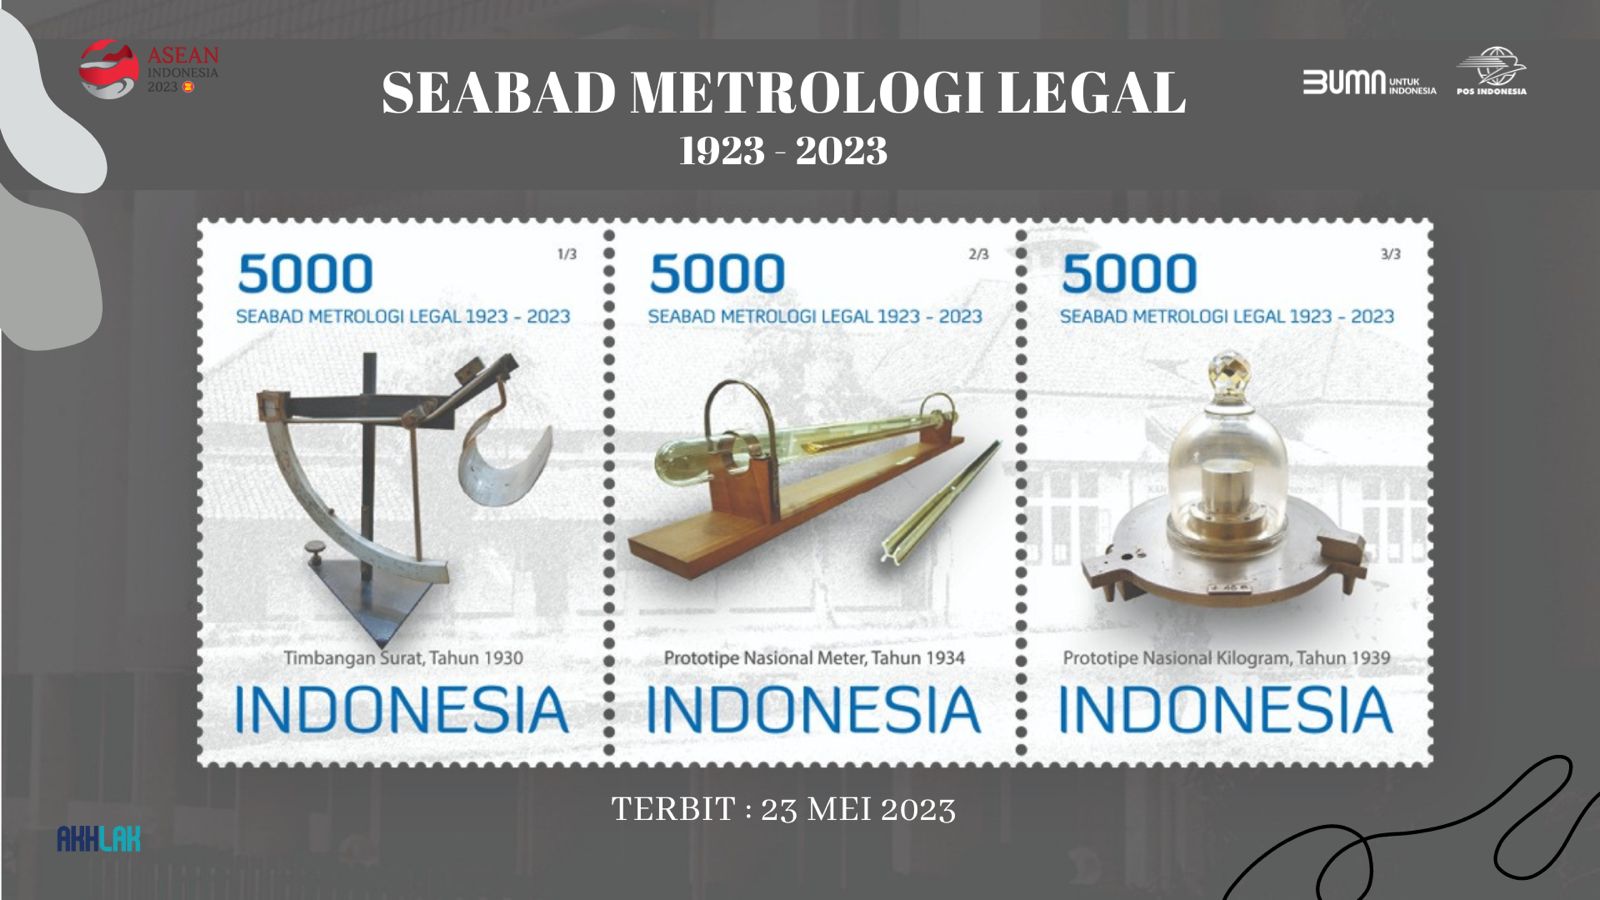 Seabad Metrologi Legal di Indonesia (1923-2023)